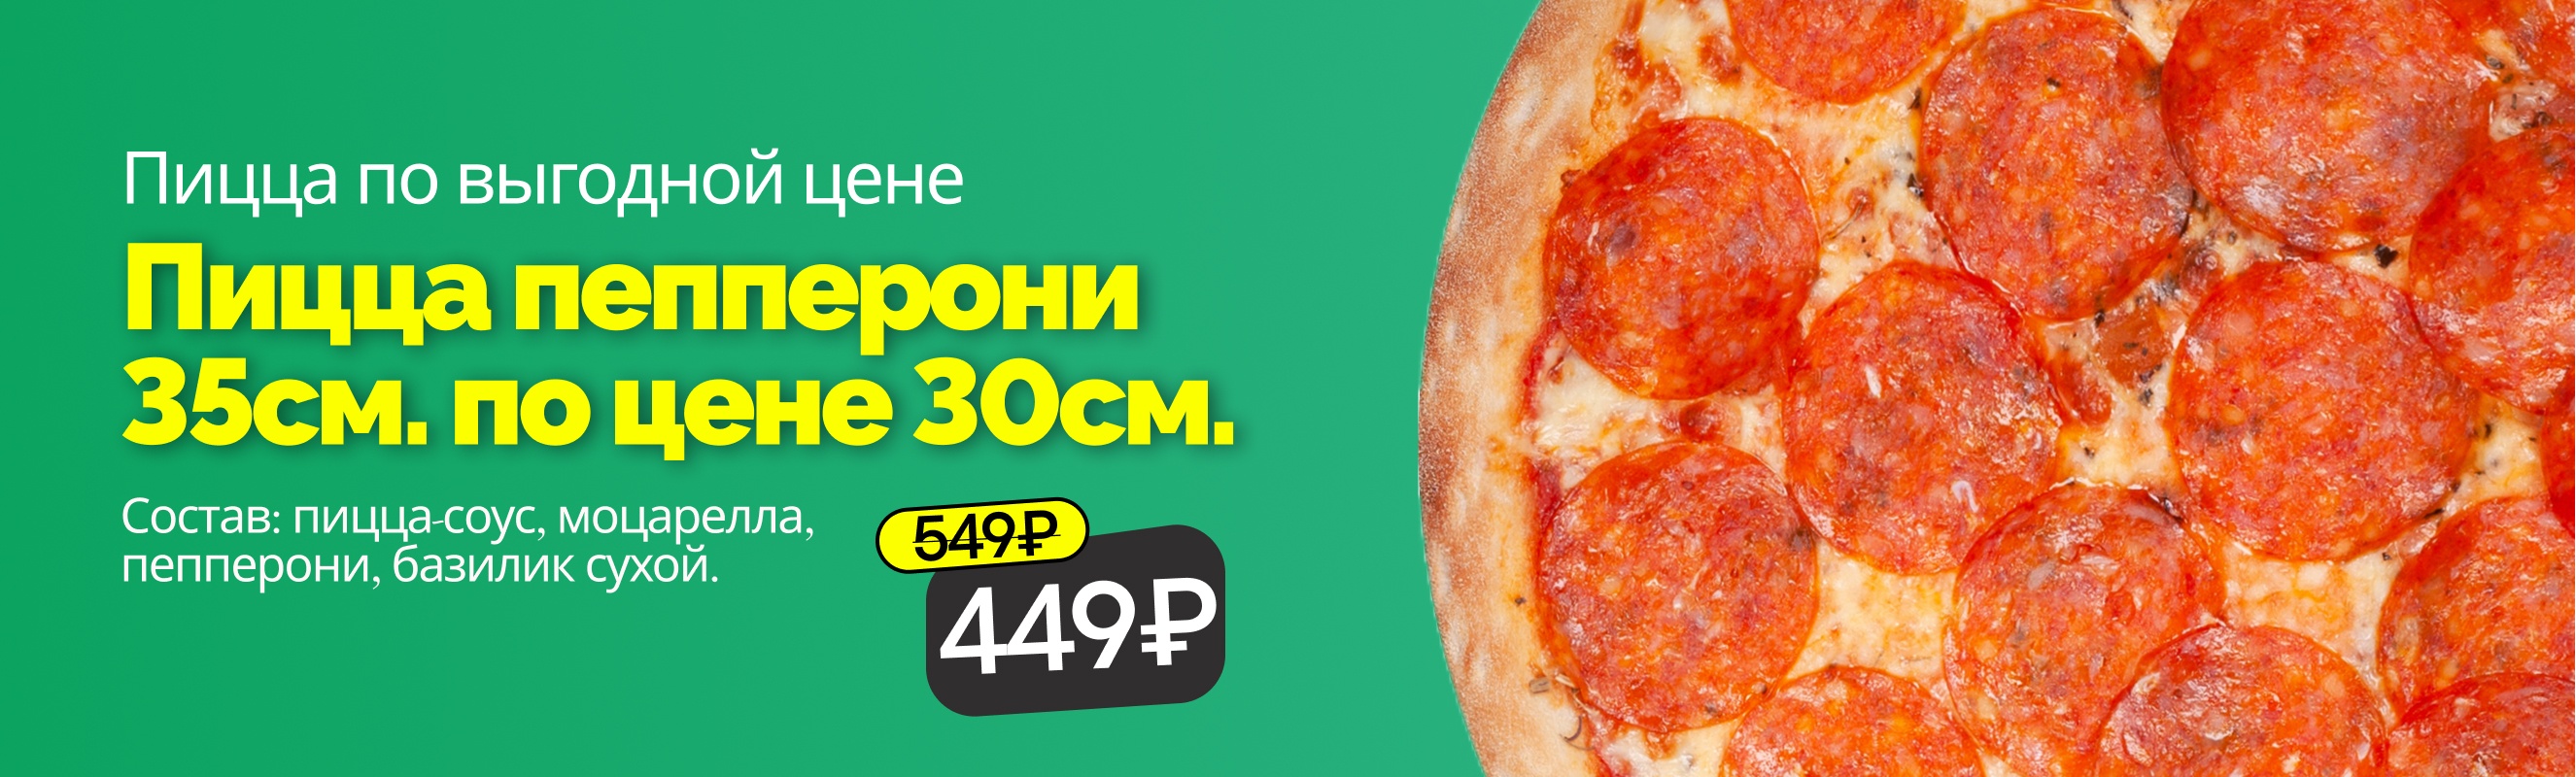 Пицца Пепперони 35 см по цене 30 см